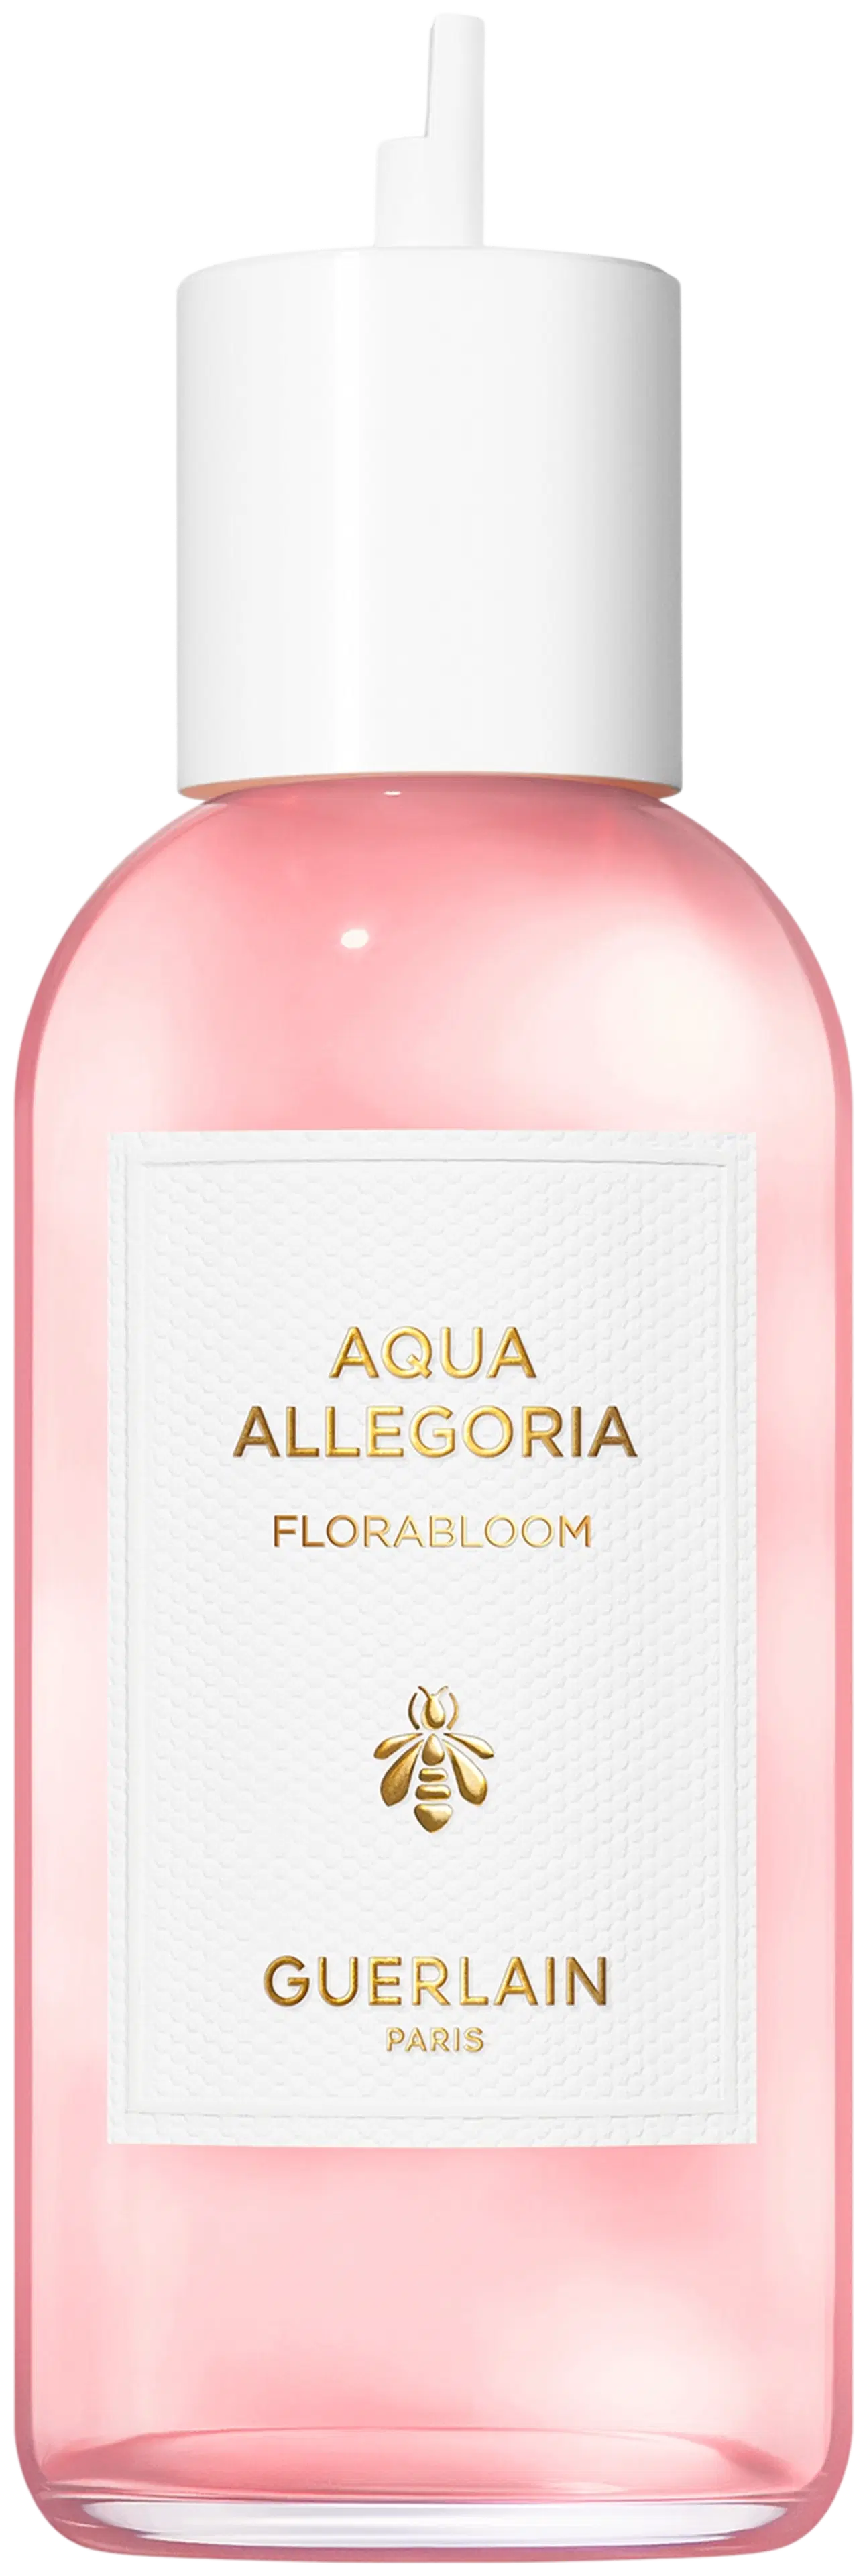 Guerlain Aqua Allegoria Florabloom Eau de Toilette 200 ml Refill